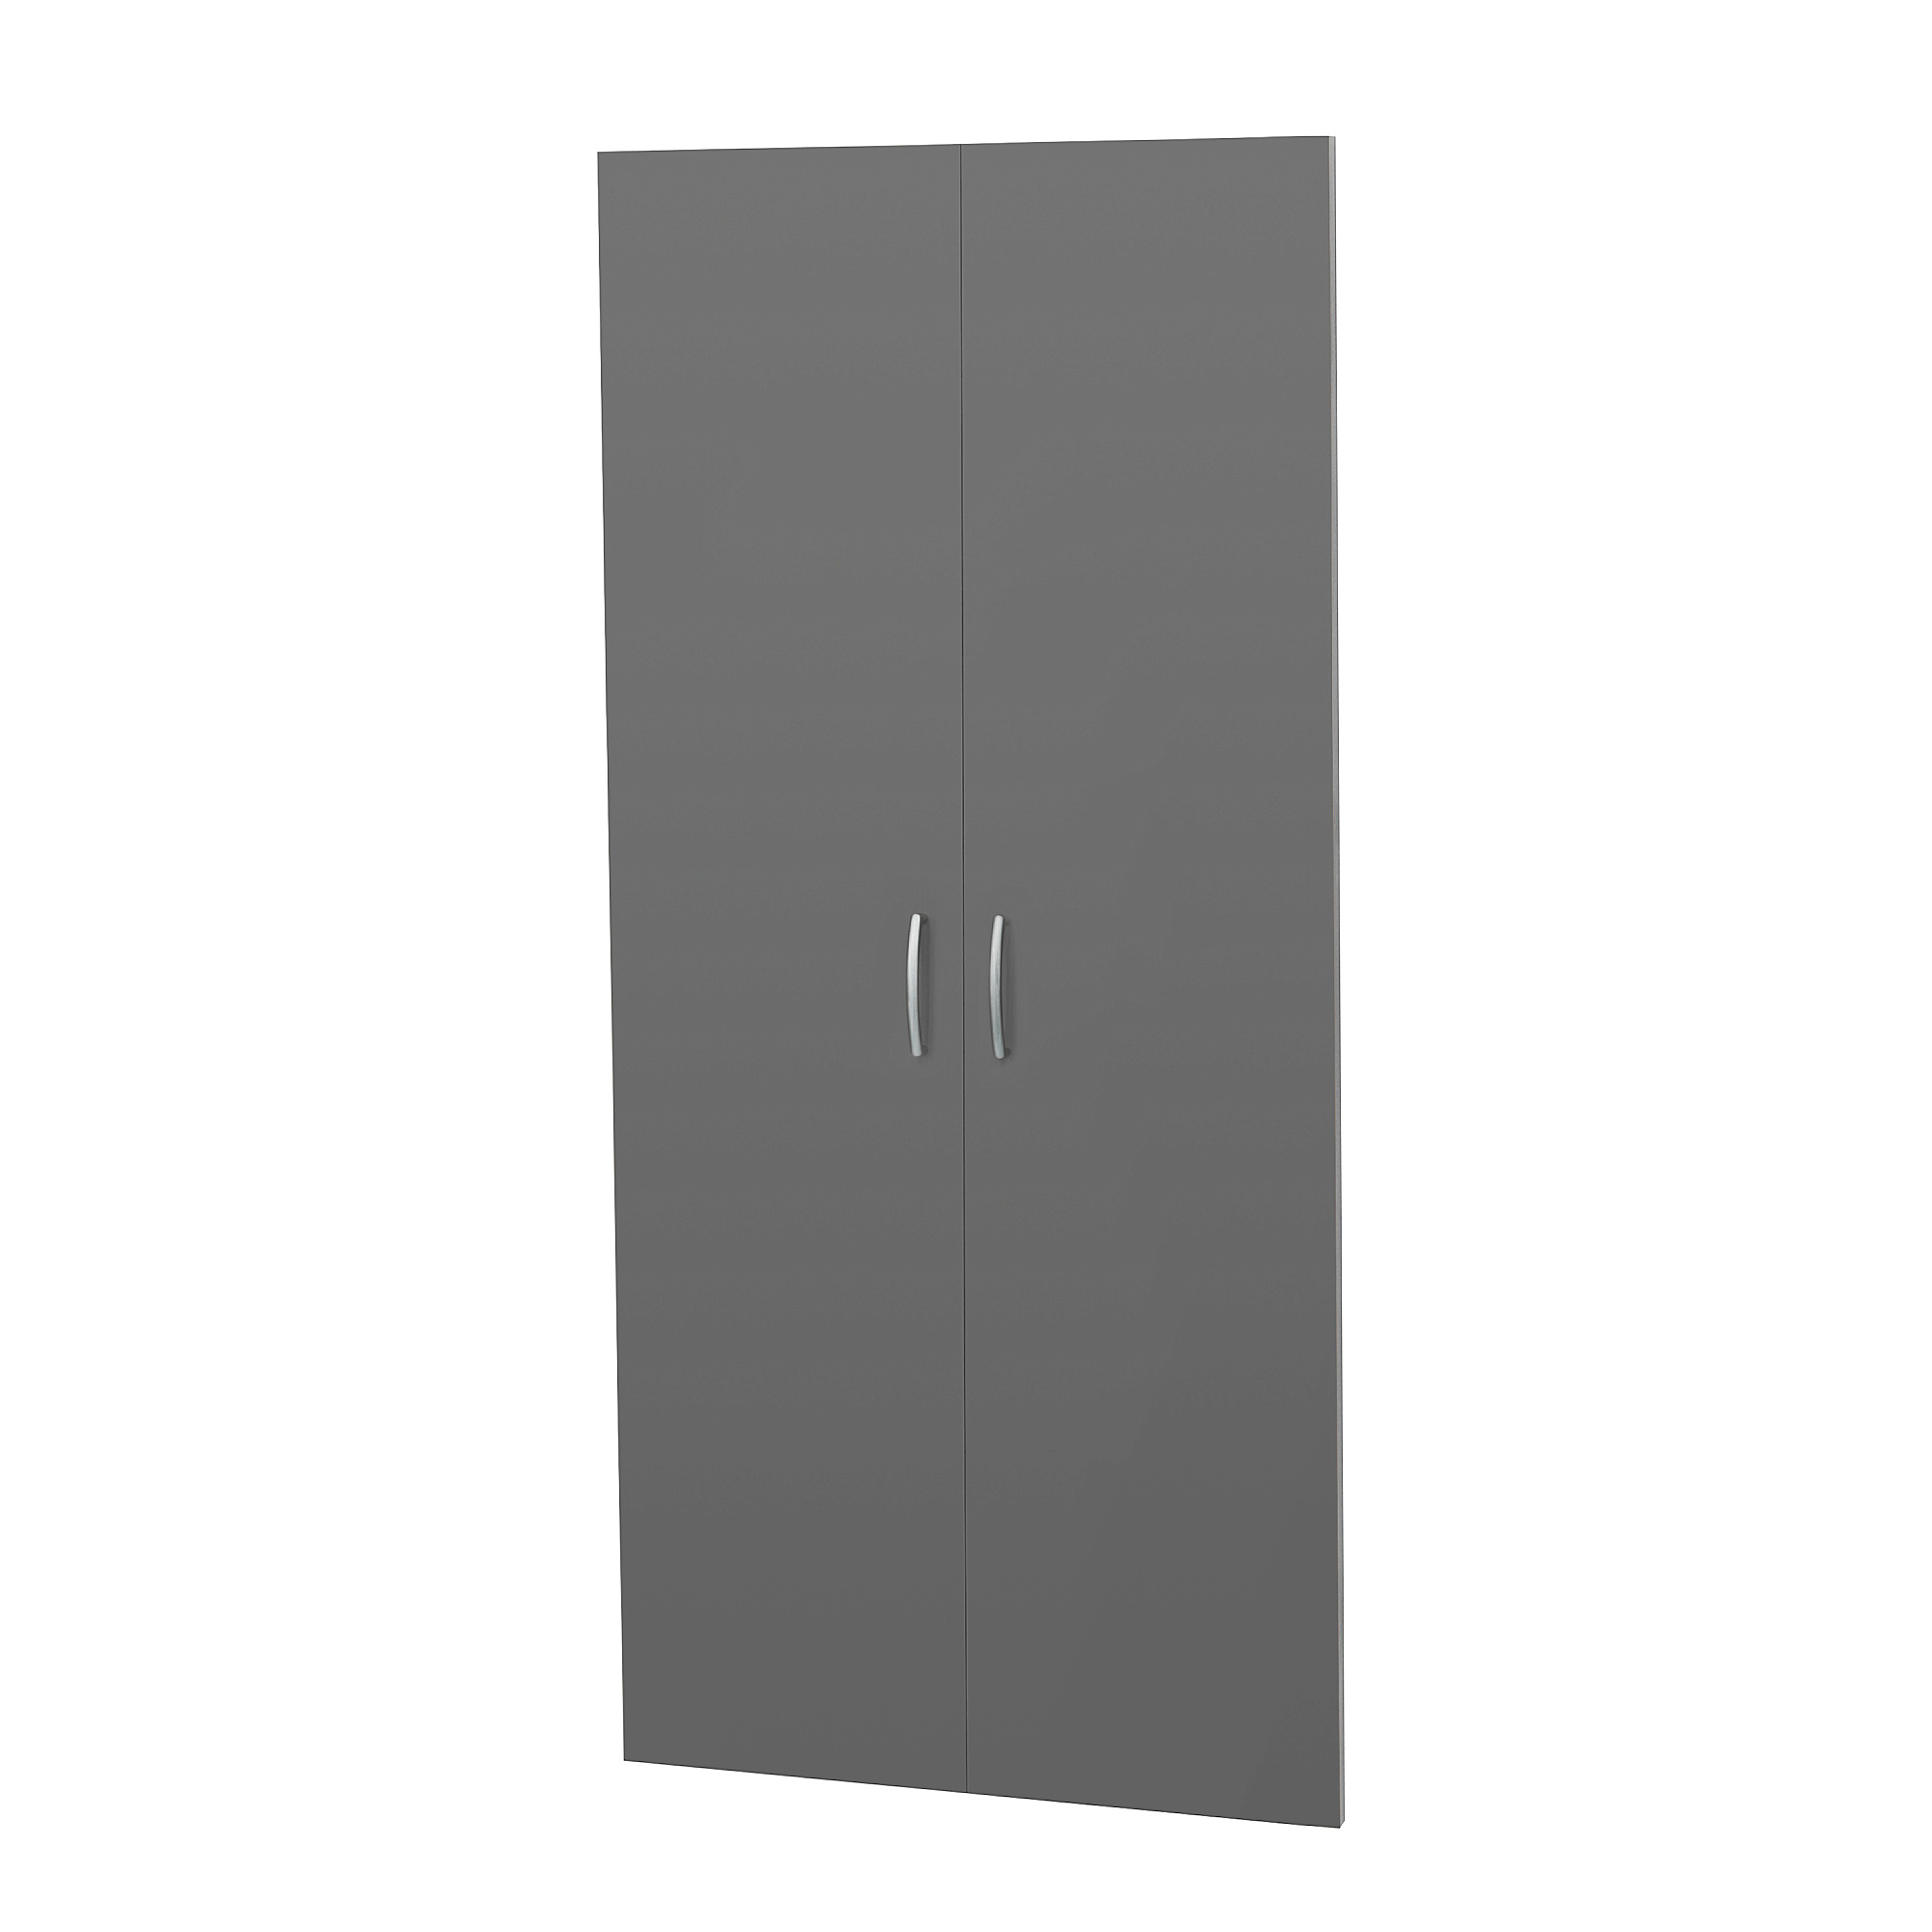 Dveře ke skříním FLEXUS, výška 1610 mm, šedá